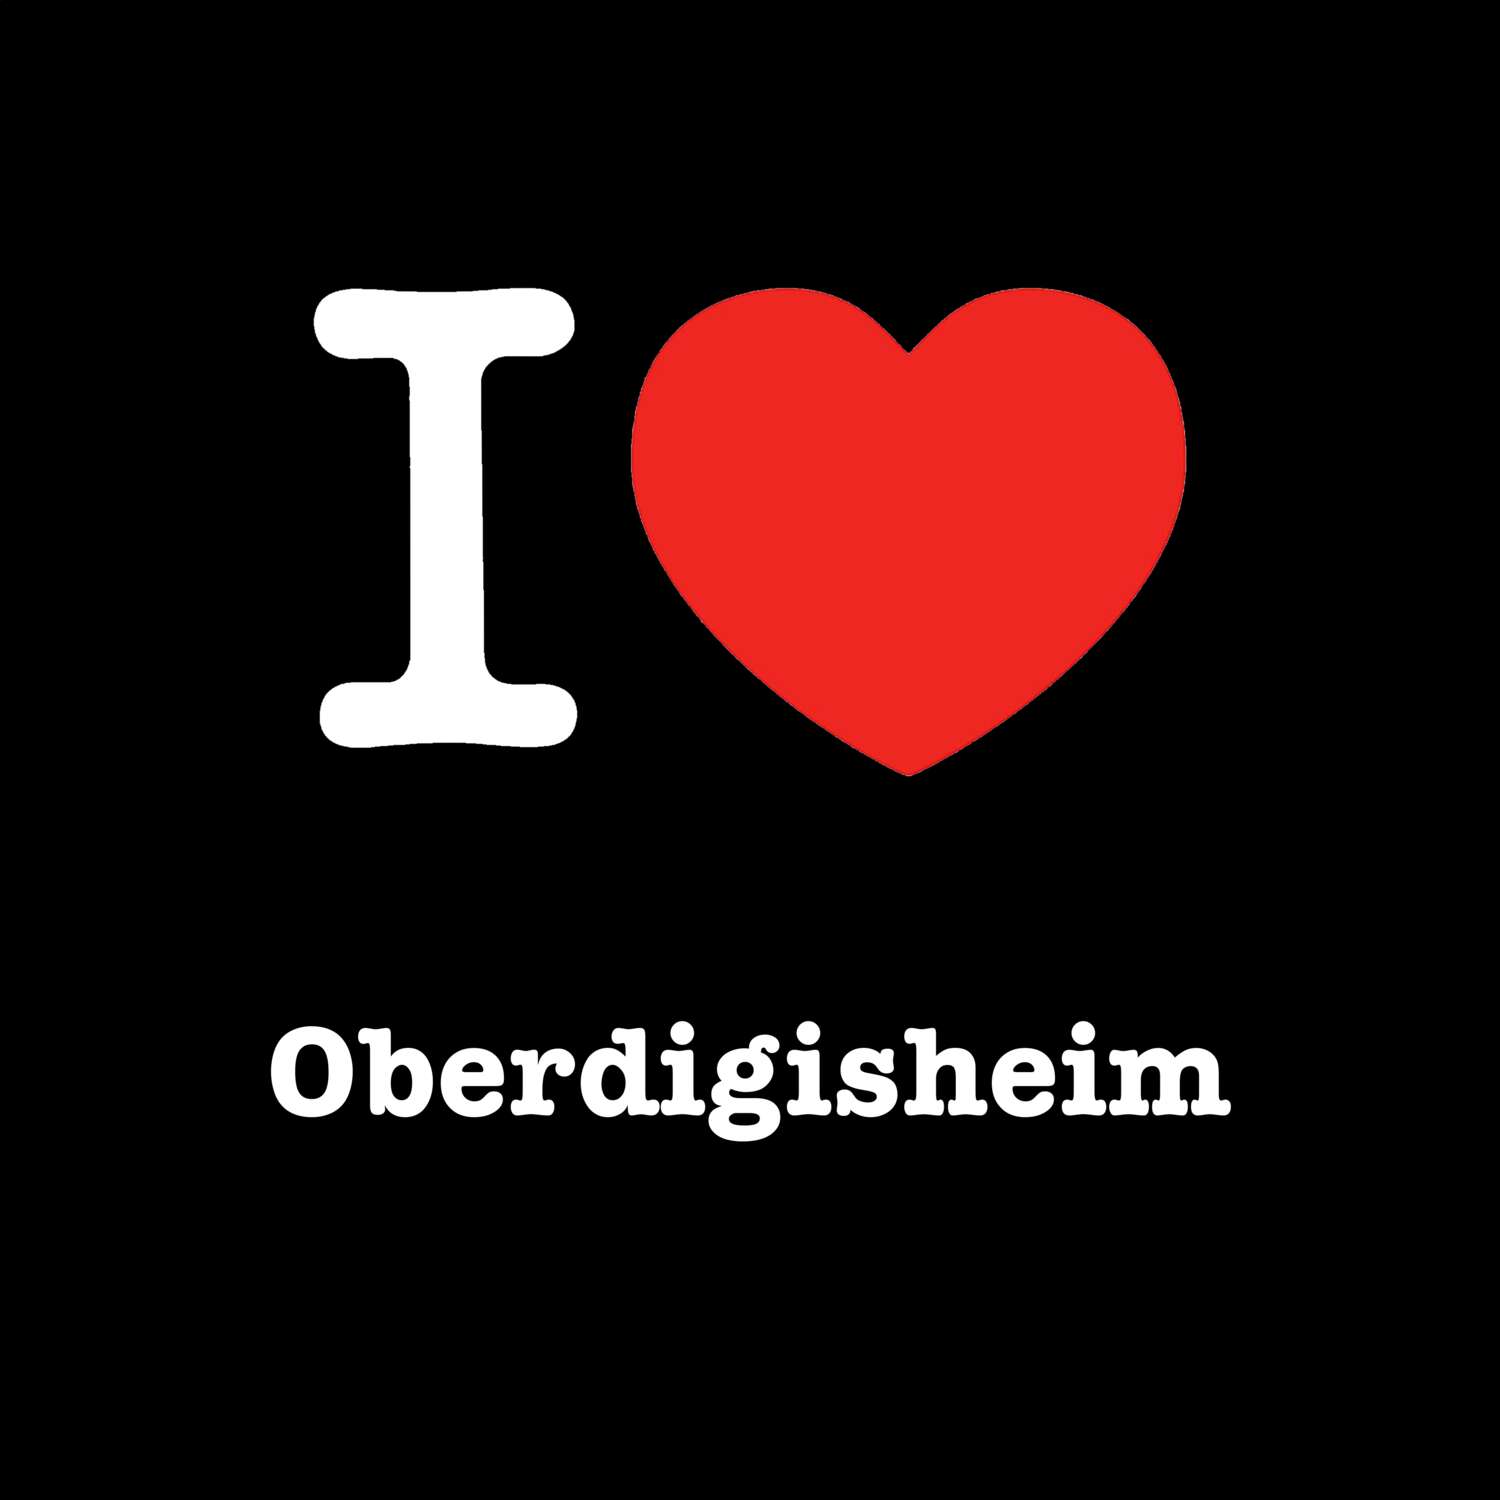 Oberdigisheim T-Shirt »I love«